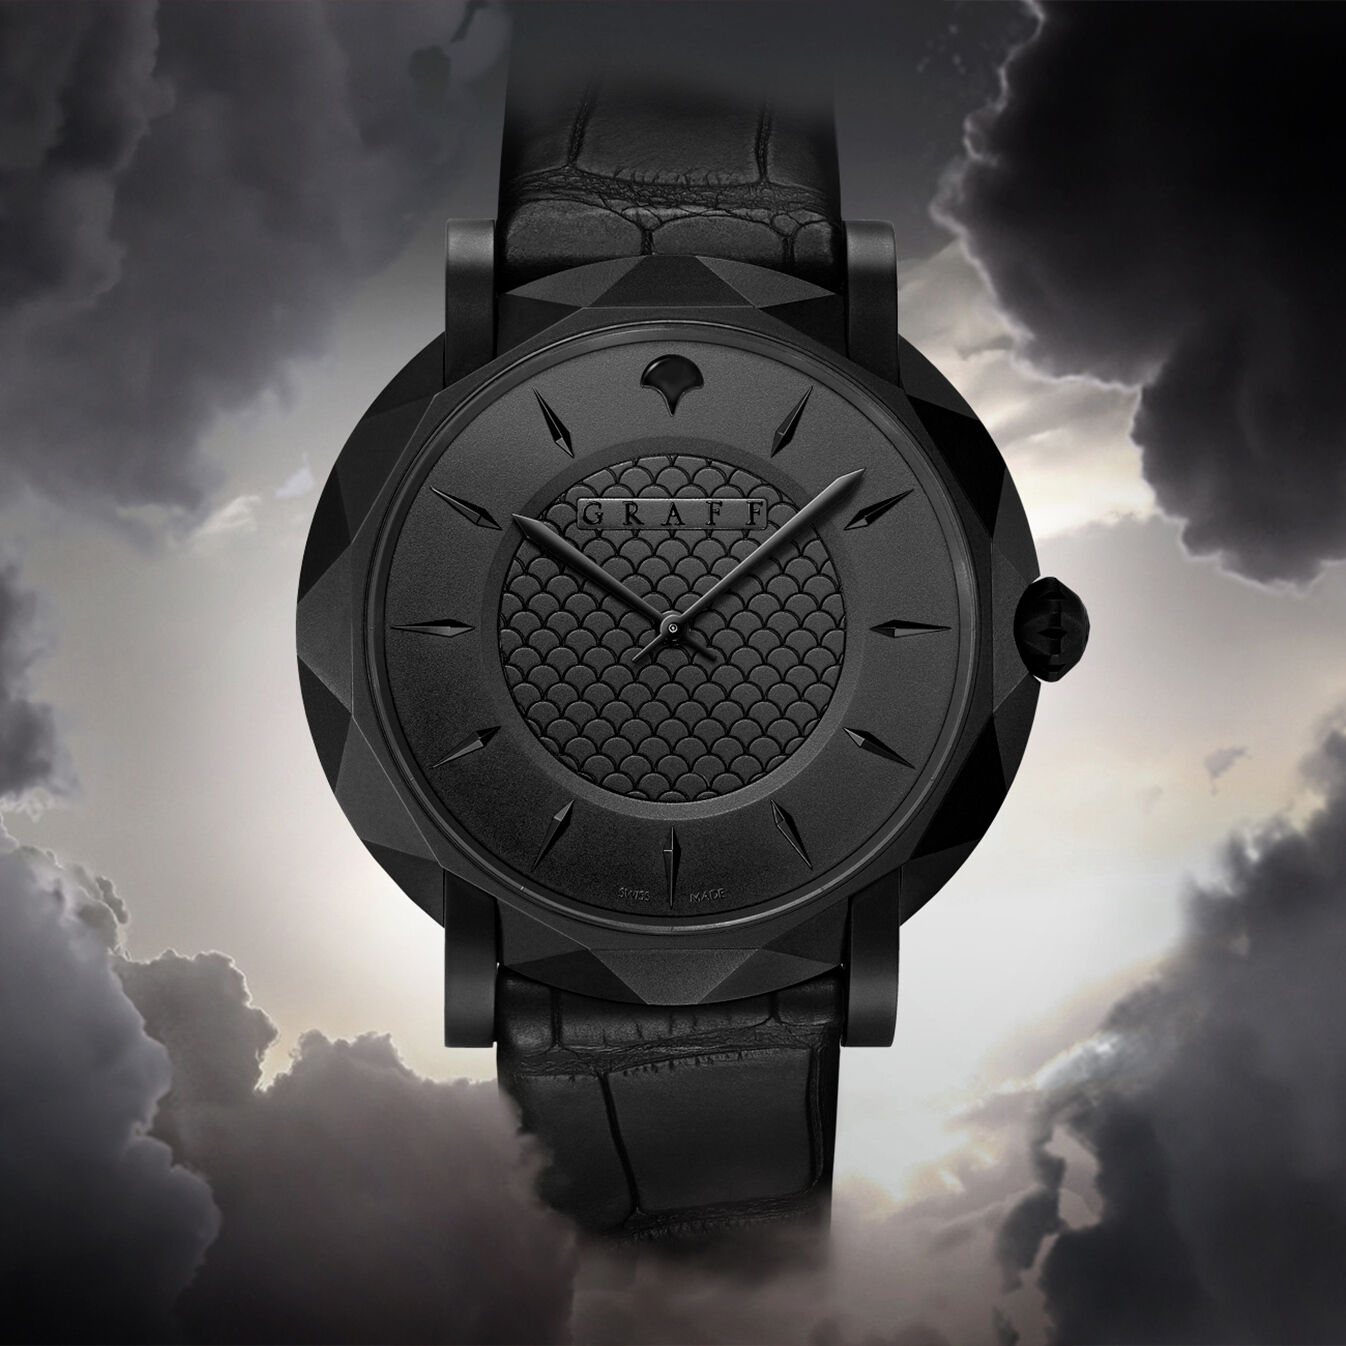 Graff Eclipse watch on a grey cloudy background